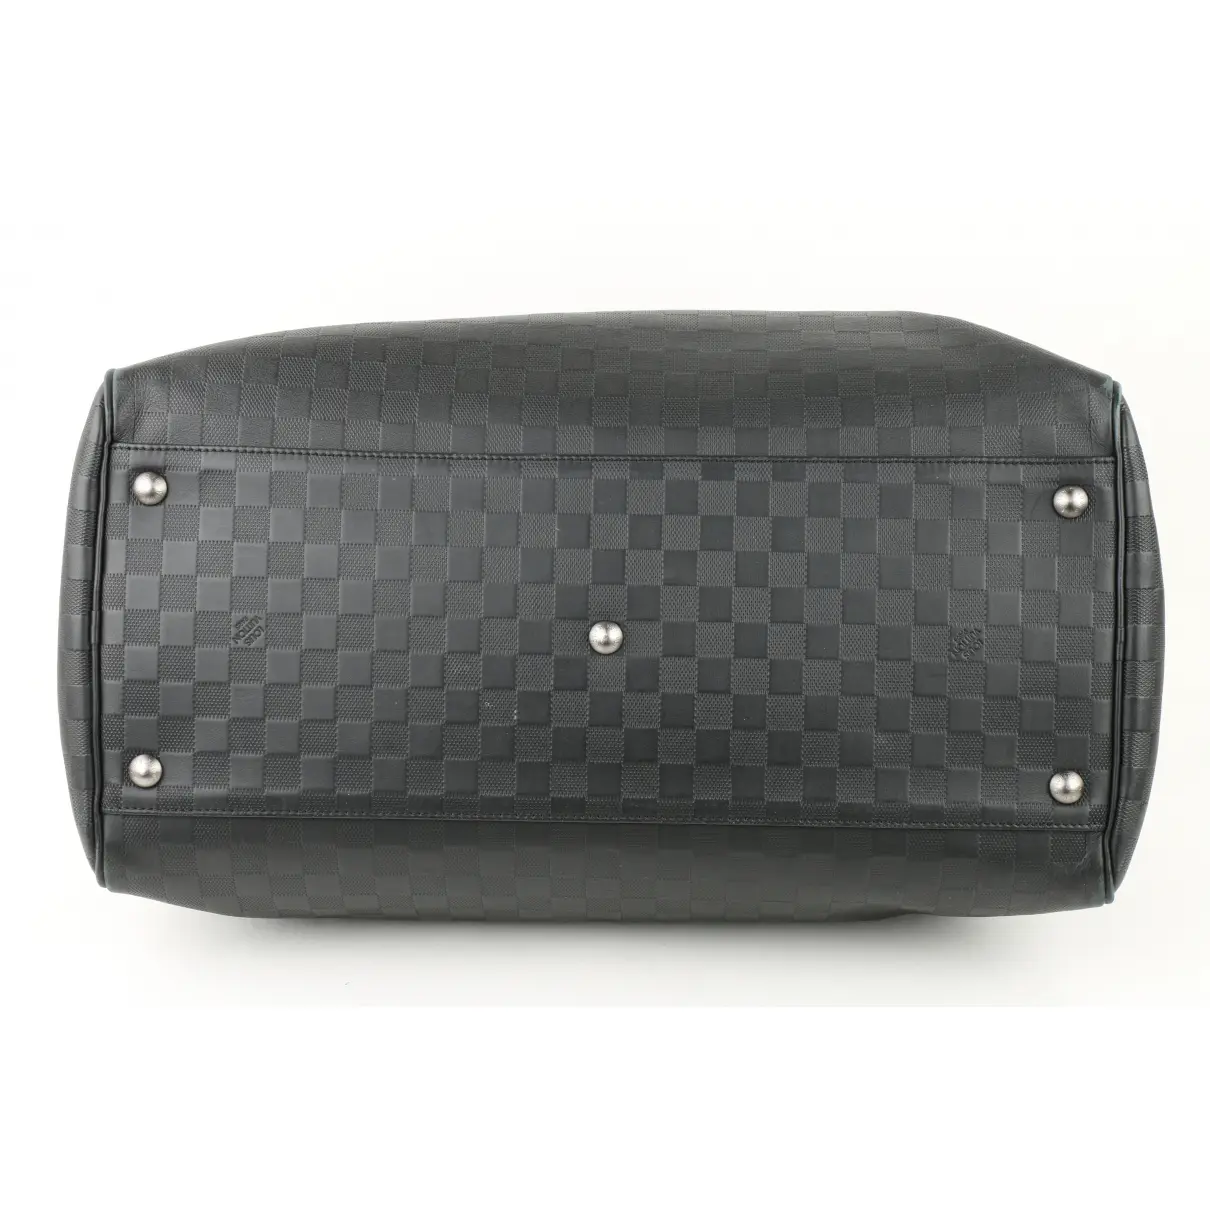 Buy Louis Vuitton Speedy leather travel bag online